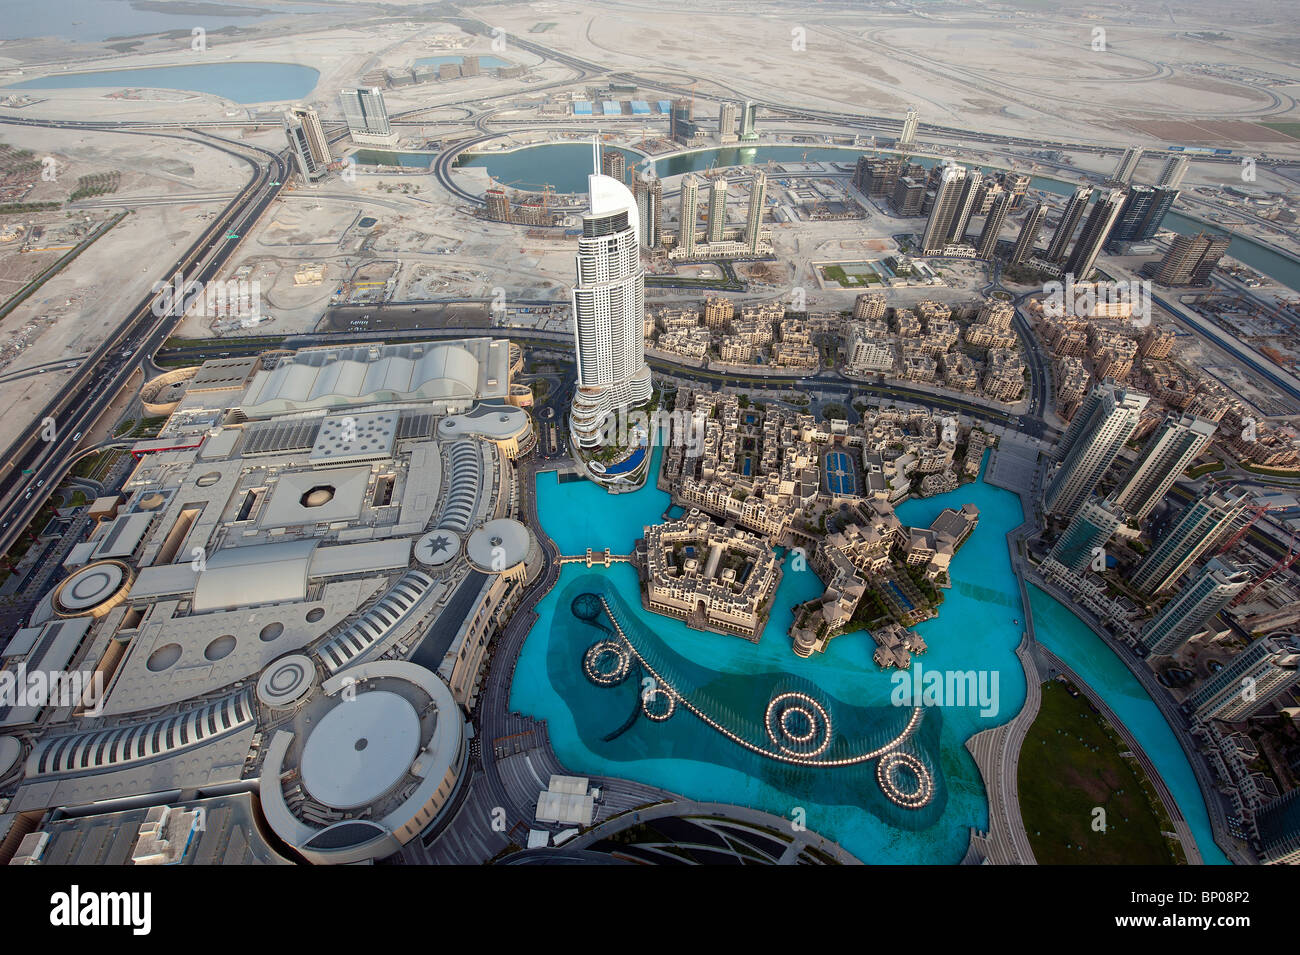 At The Top viewing platform on the Burj Khalifa, Dubai, UAE Stock Photo